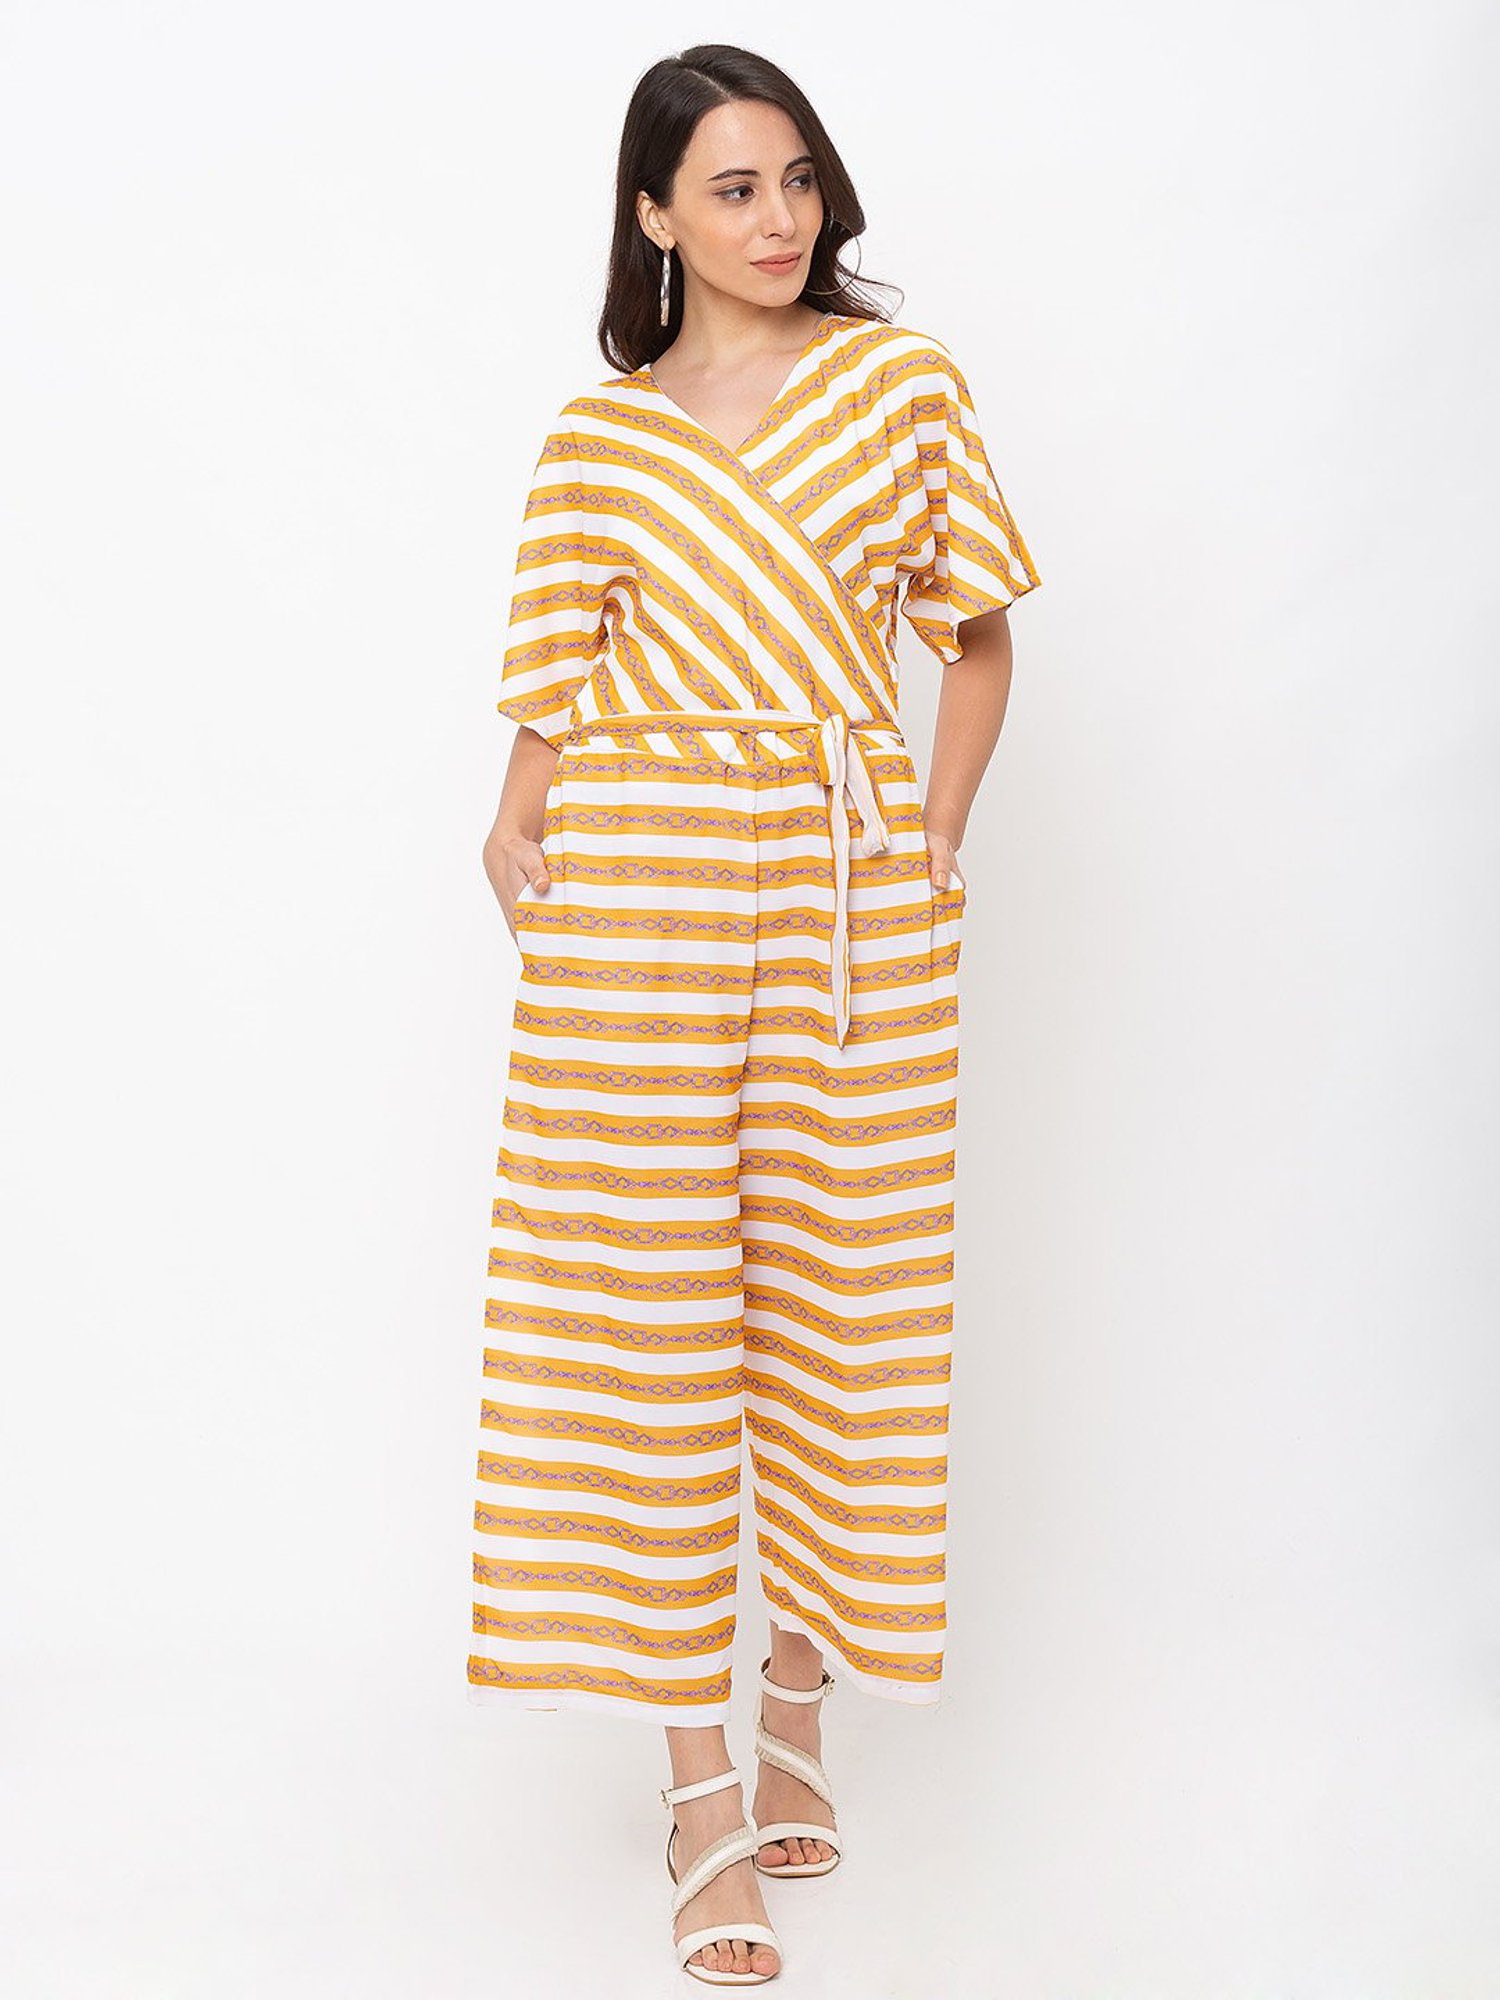 CI Sono linen collection yellow/white striped jumpsuit size small | eBay